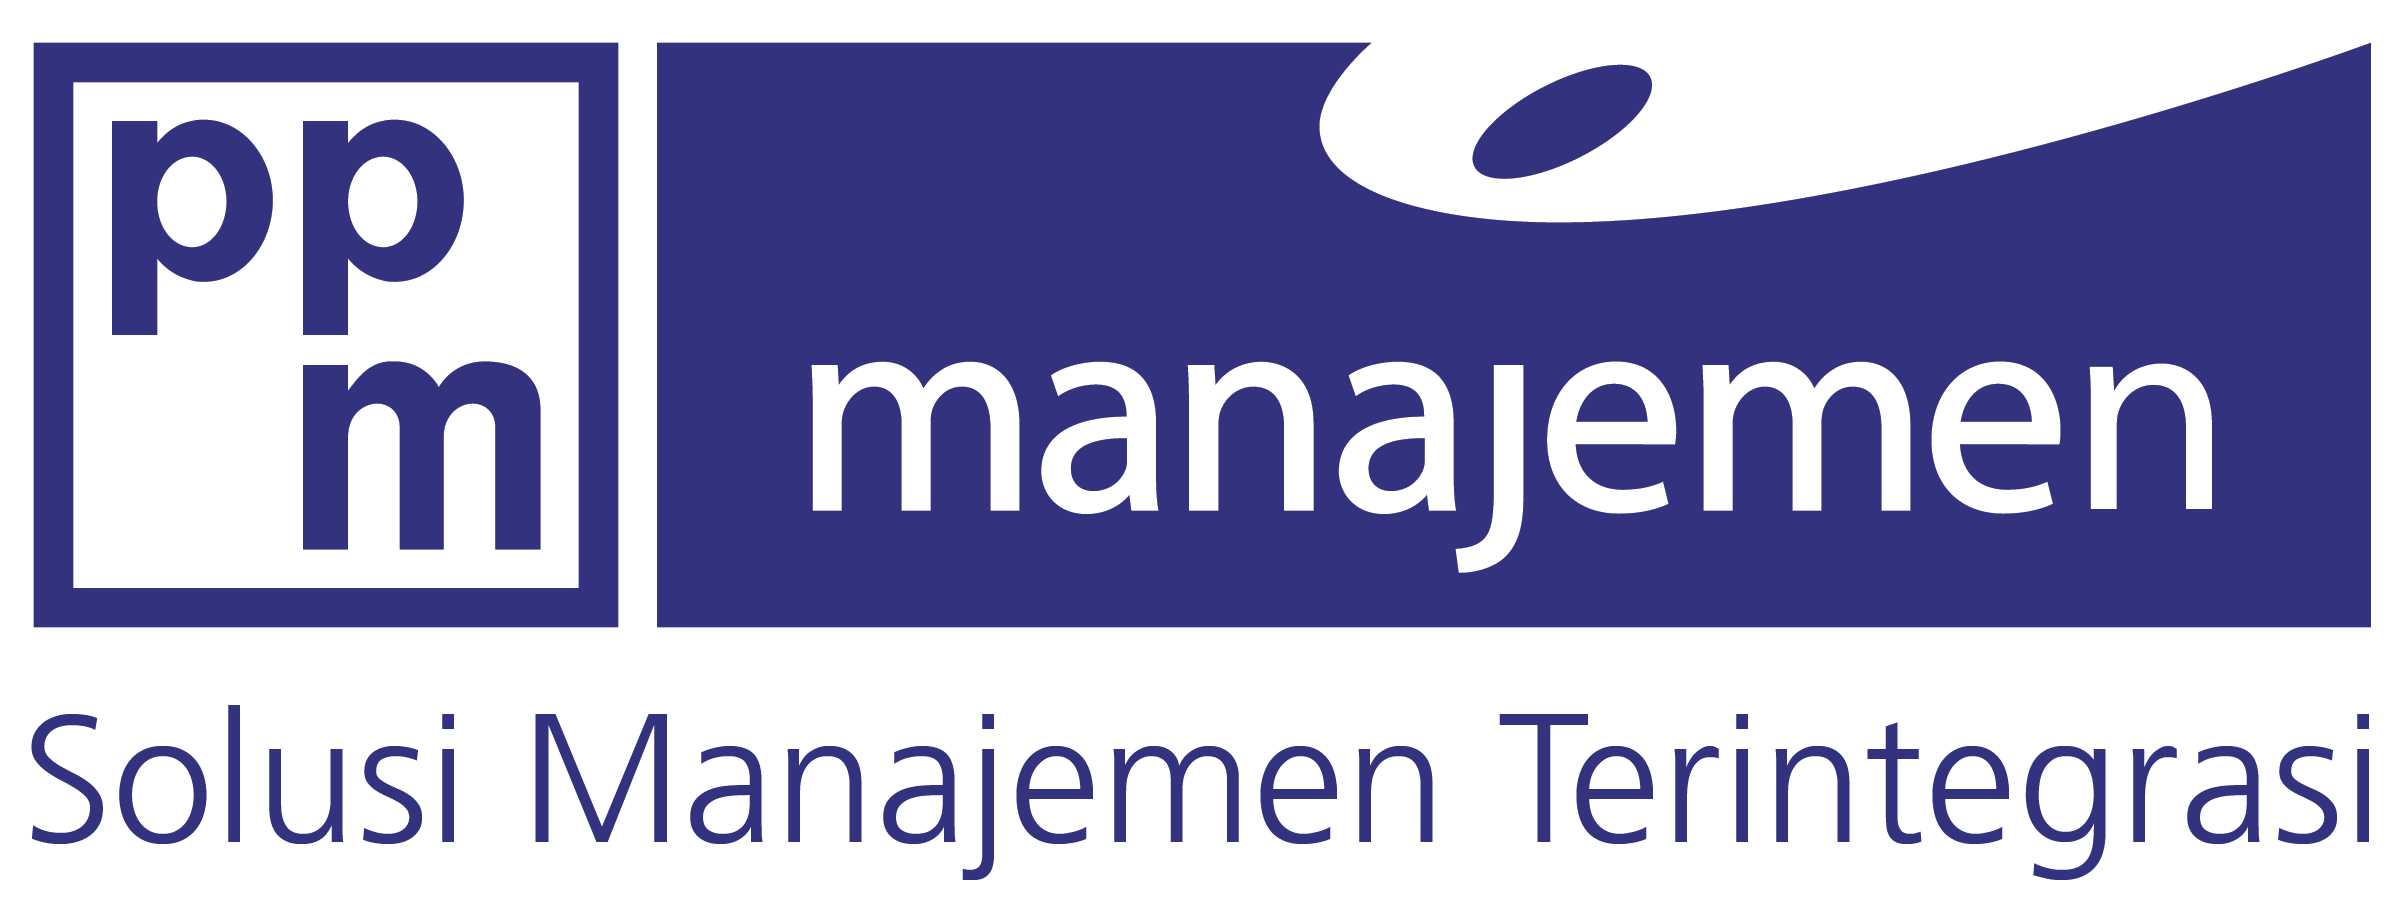 Logo of PPM MANAJEMEN